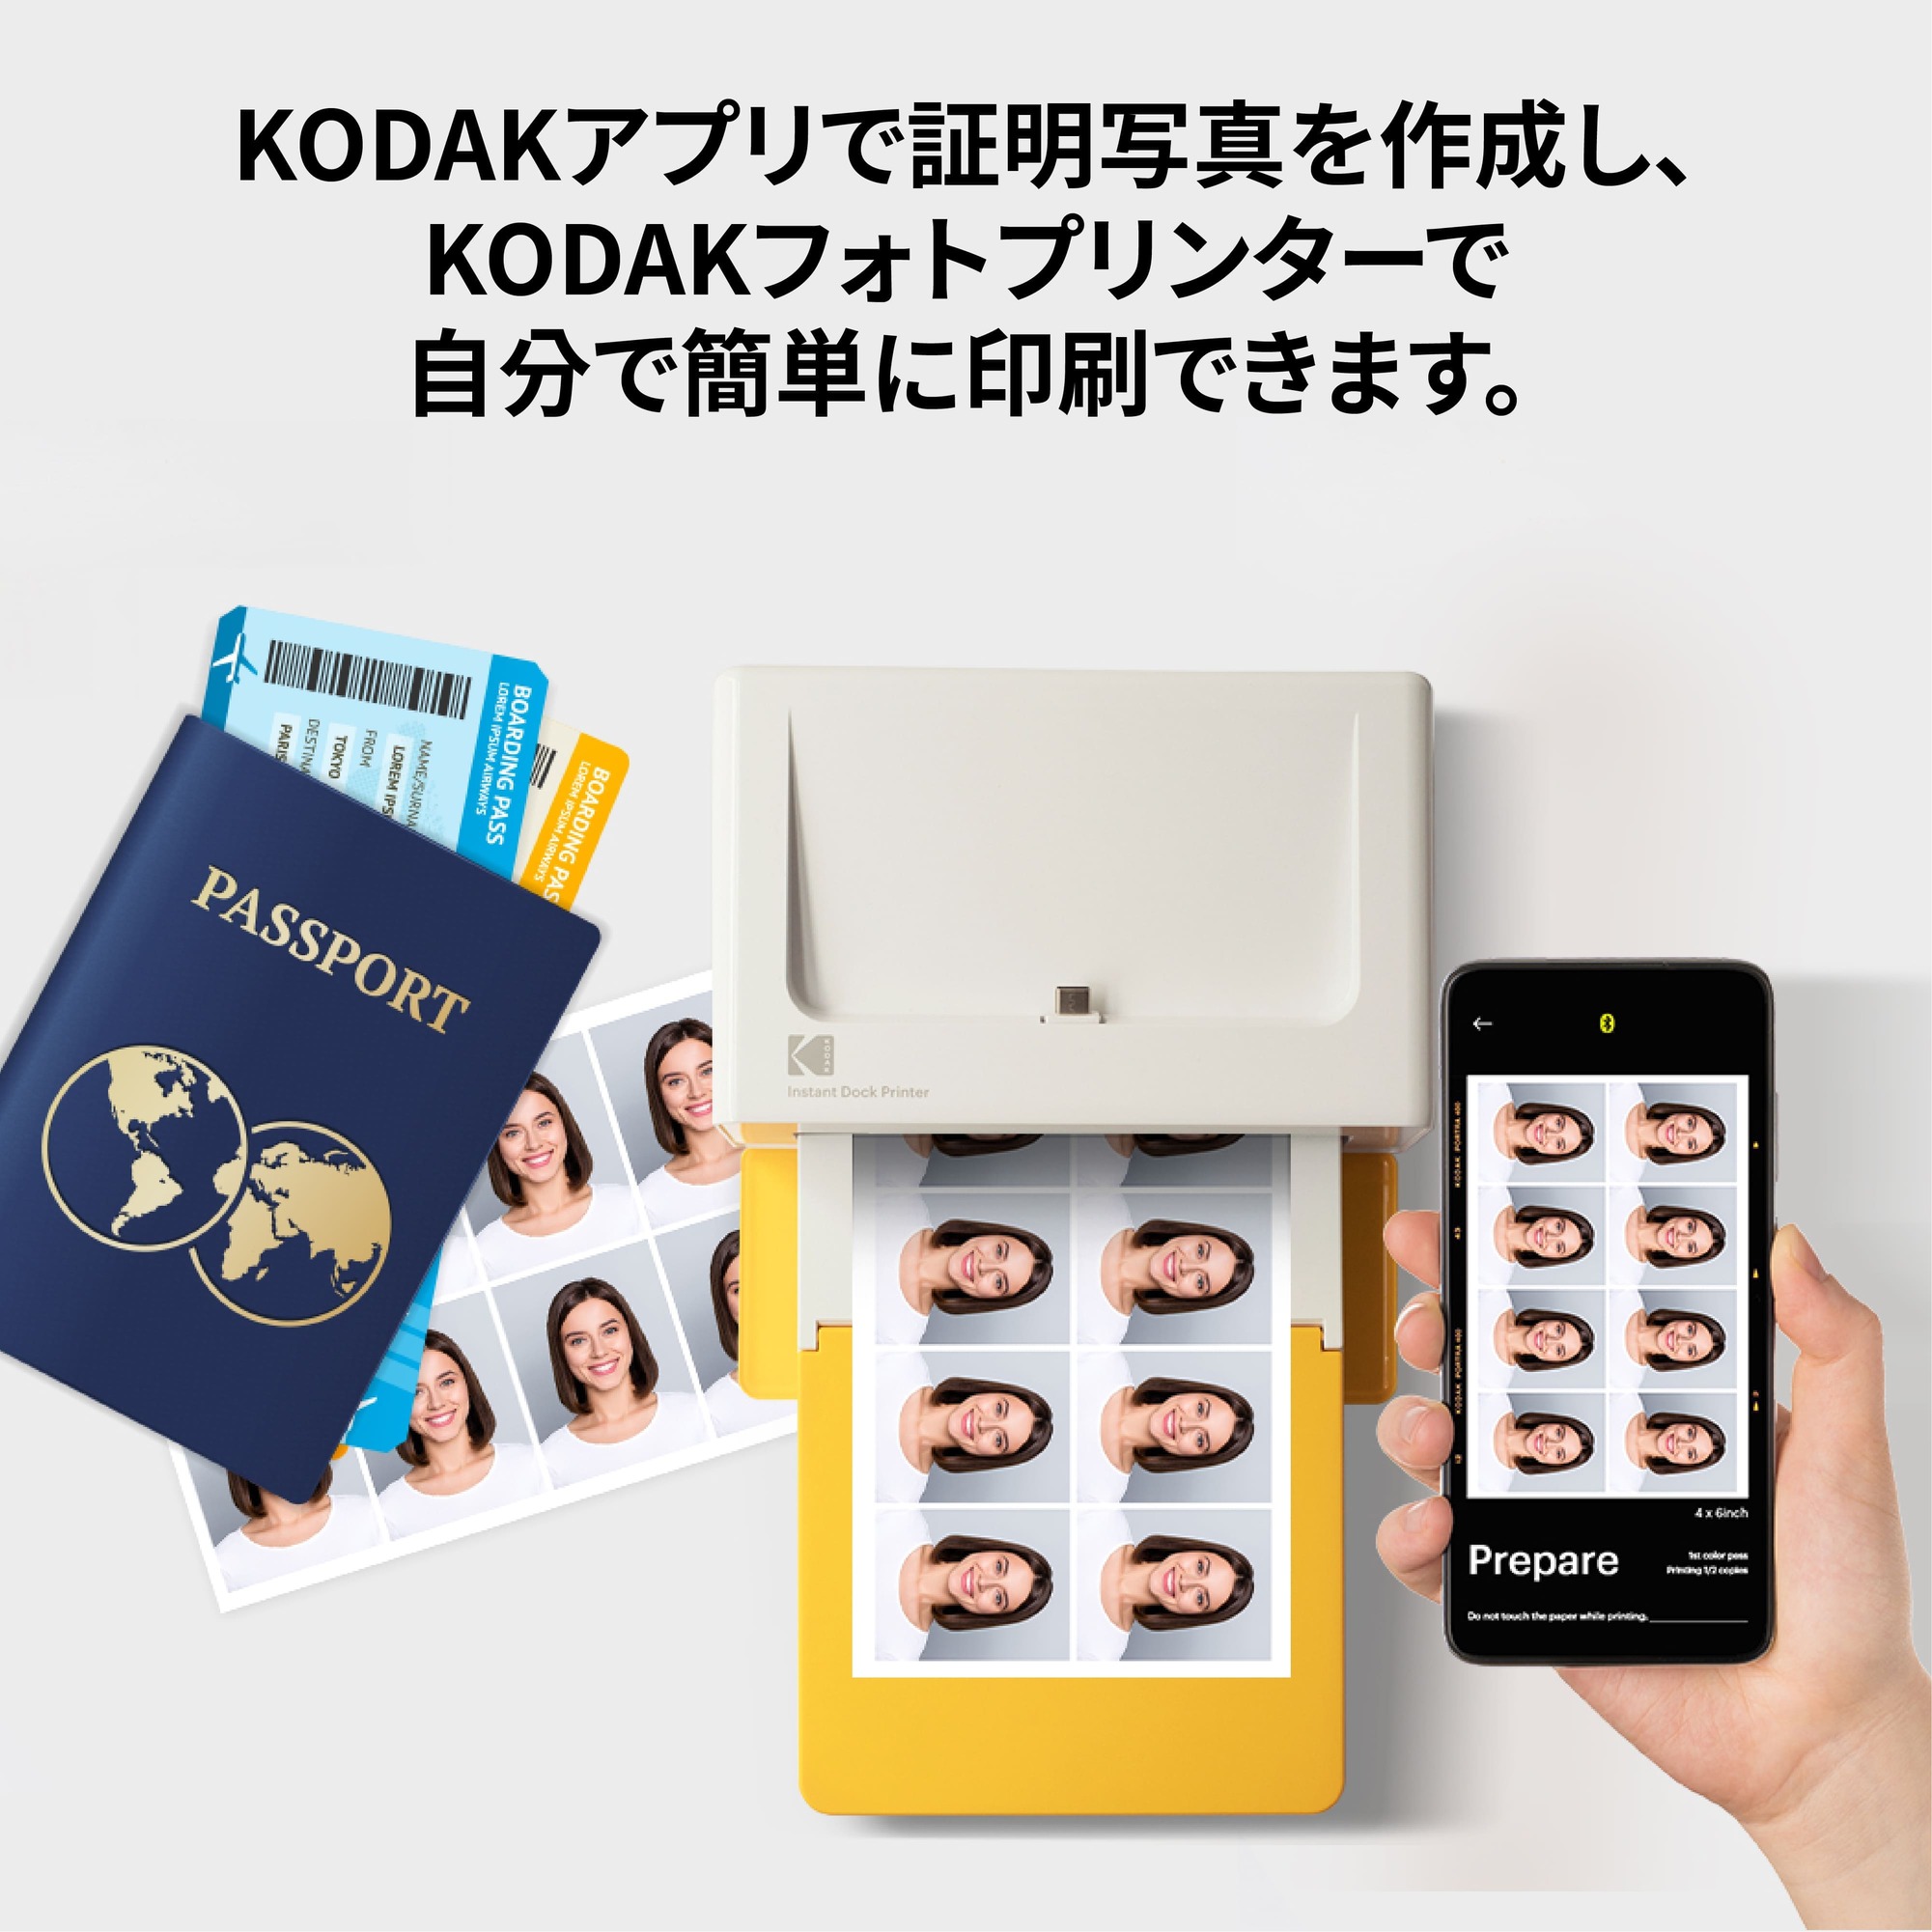 Kodak インスタント フォトプリンター PD460 コダック-